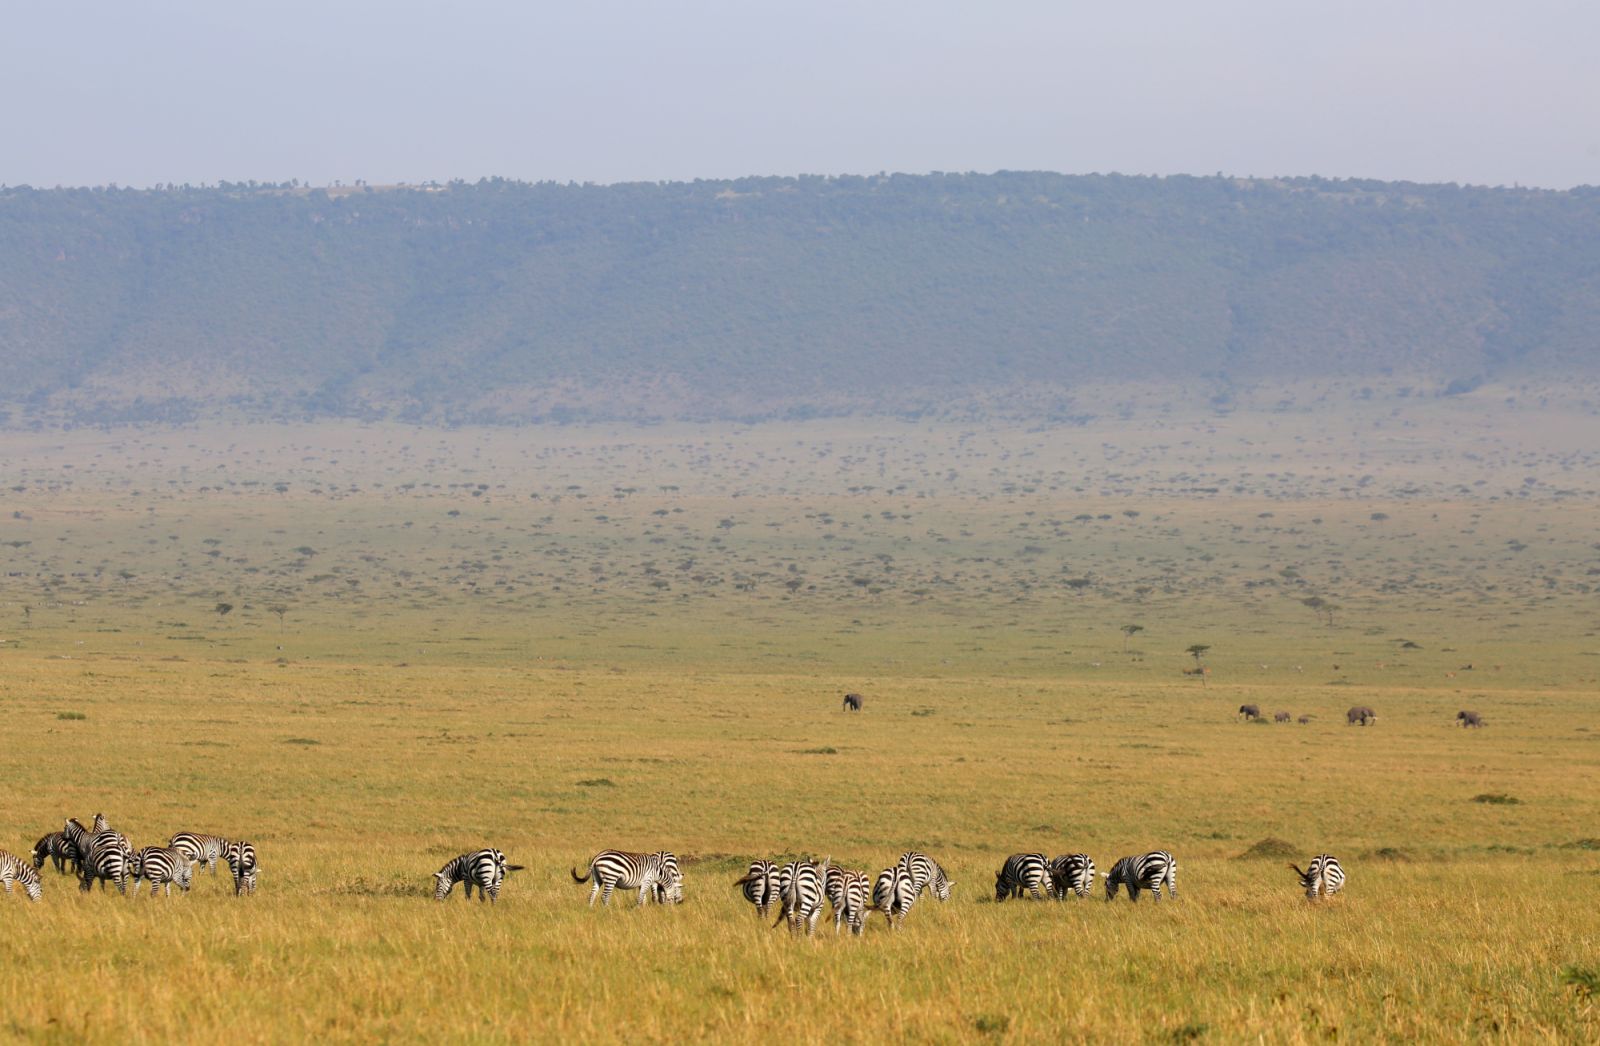 The vast Masai Mara landscape